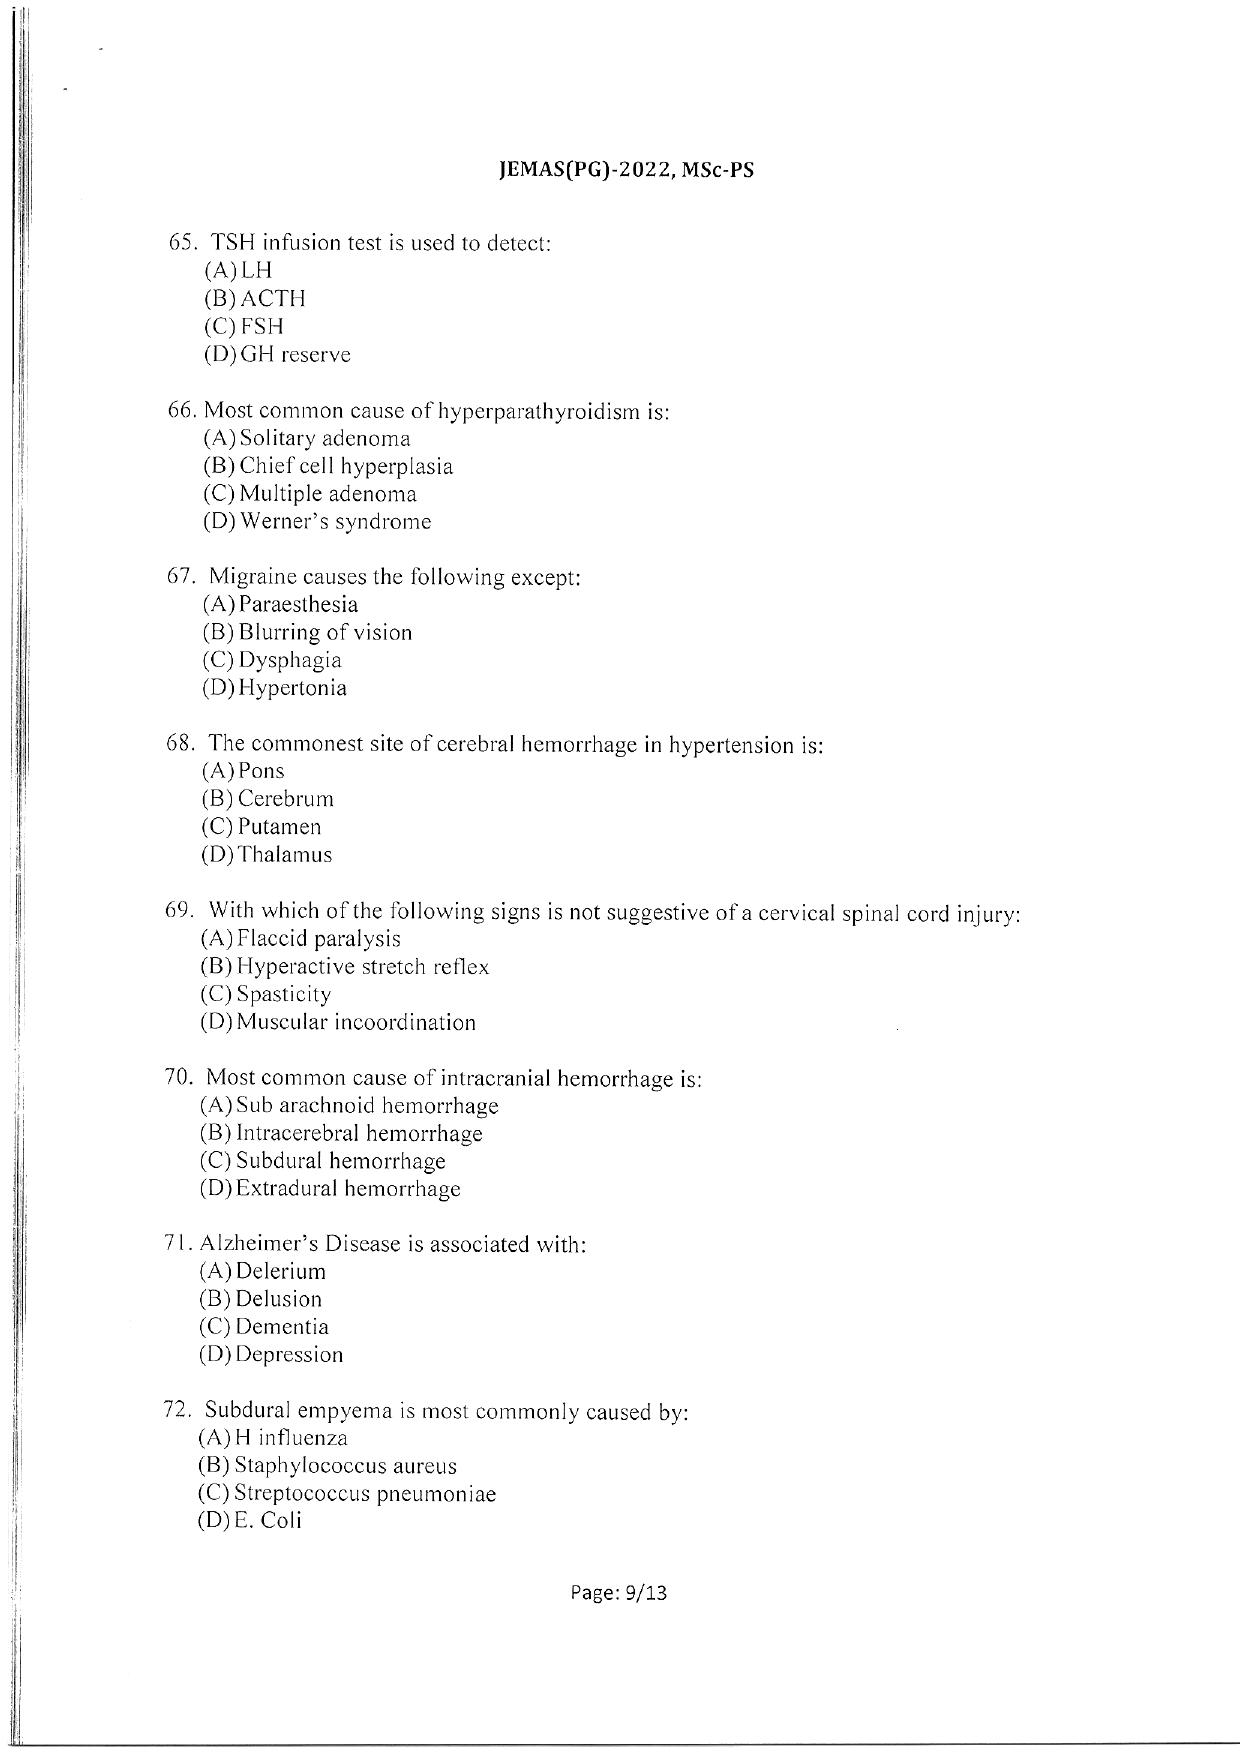 WBJEEB JEMAS (PG) 2022 MSc PS Question Paper - Page 11